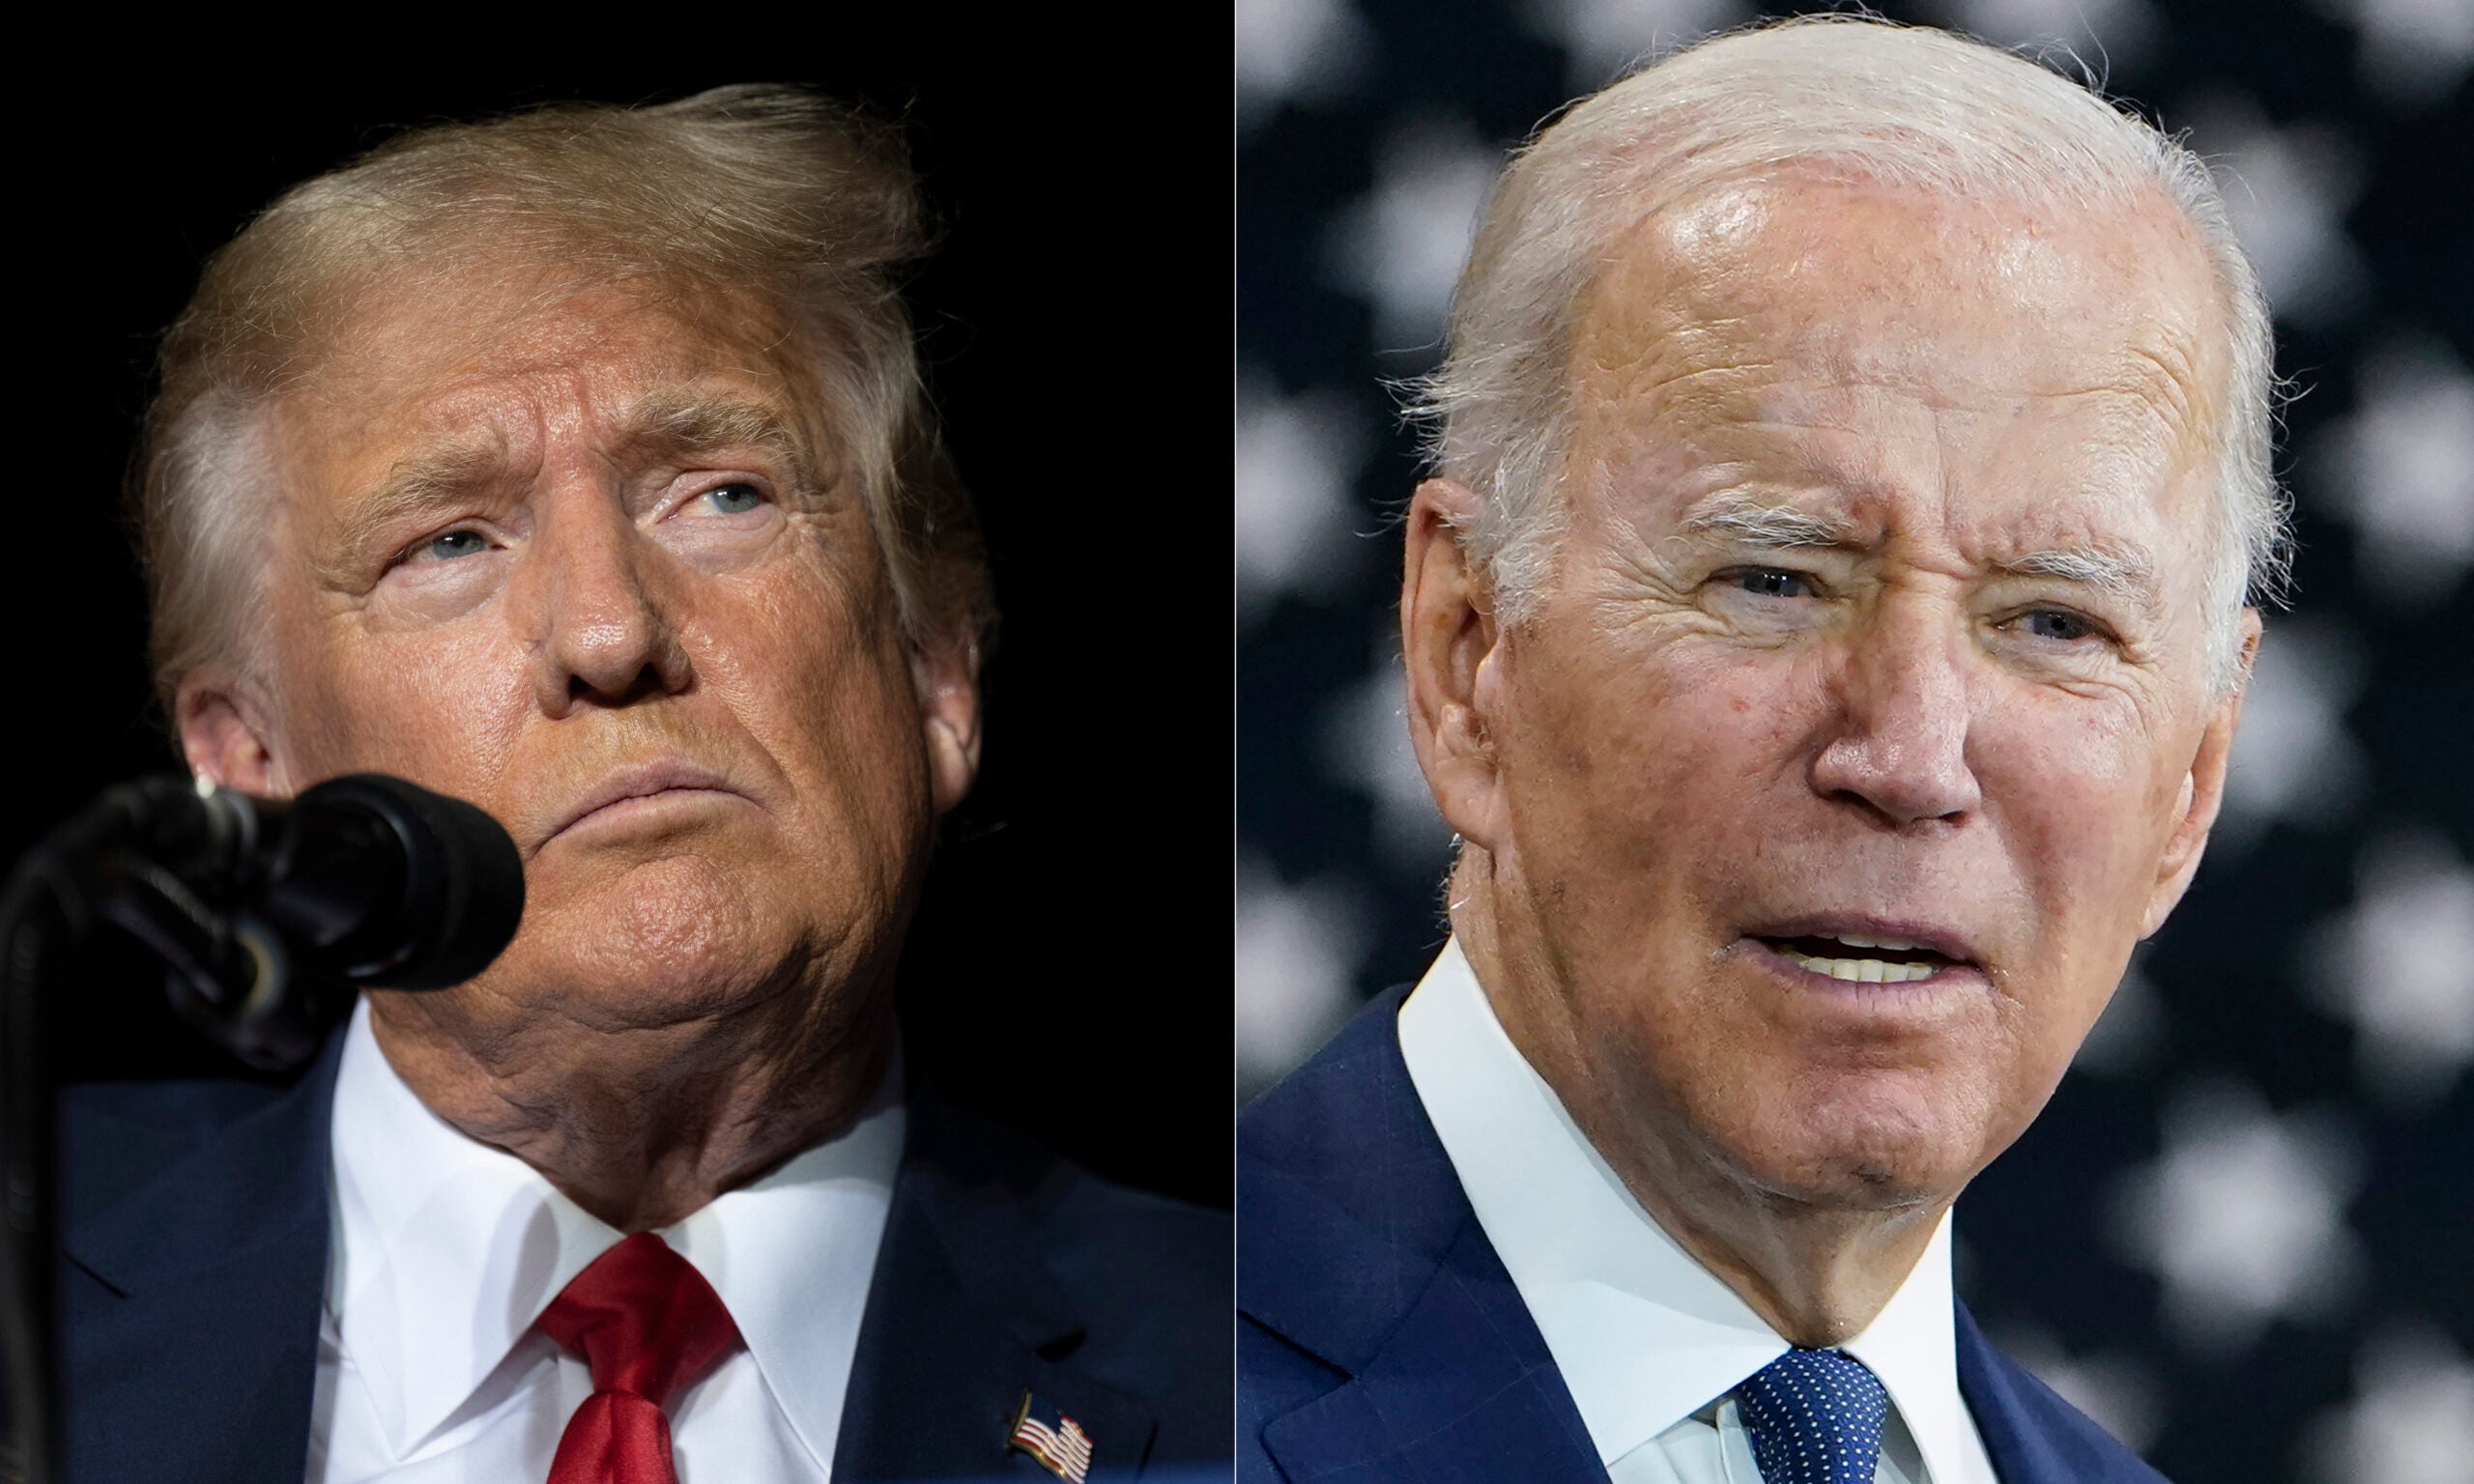 A split image of Donald Trump and Joe Biden.